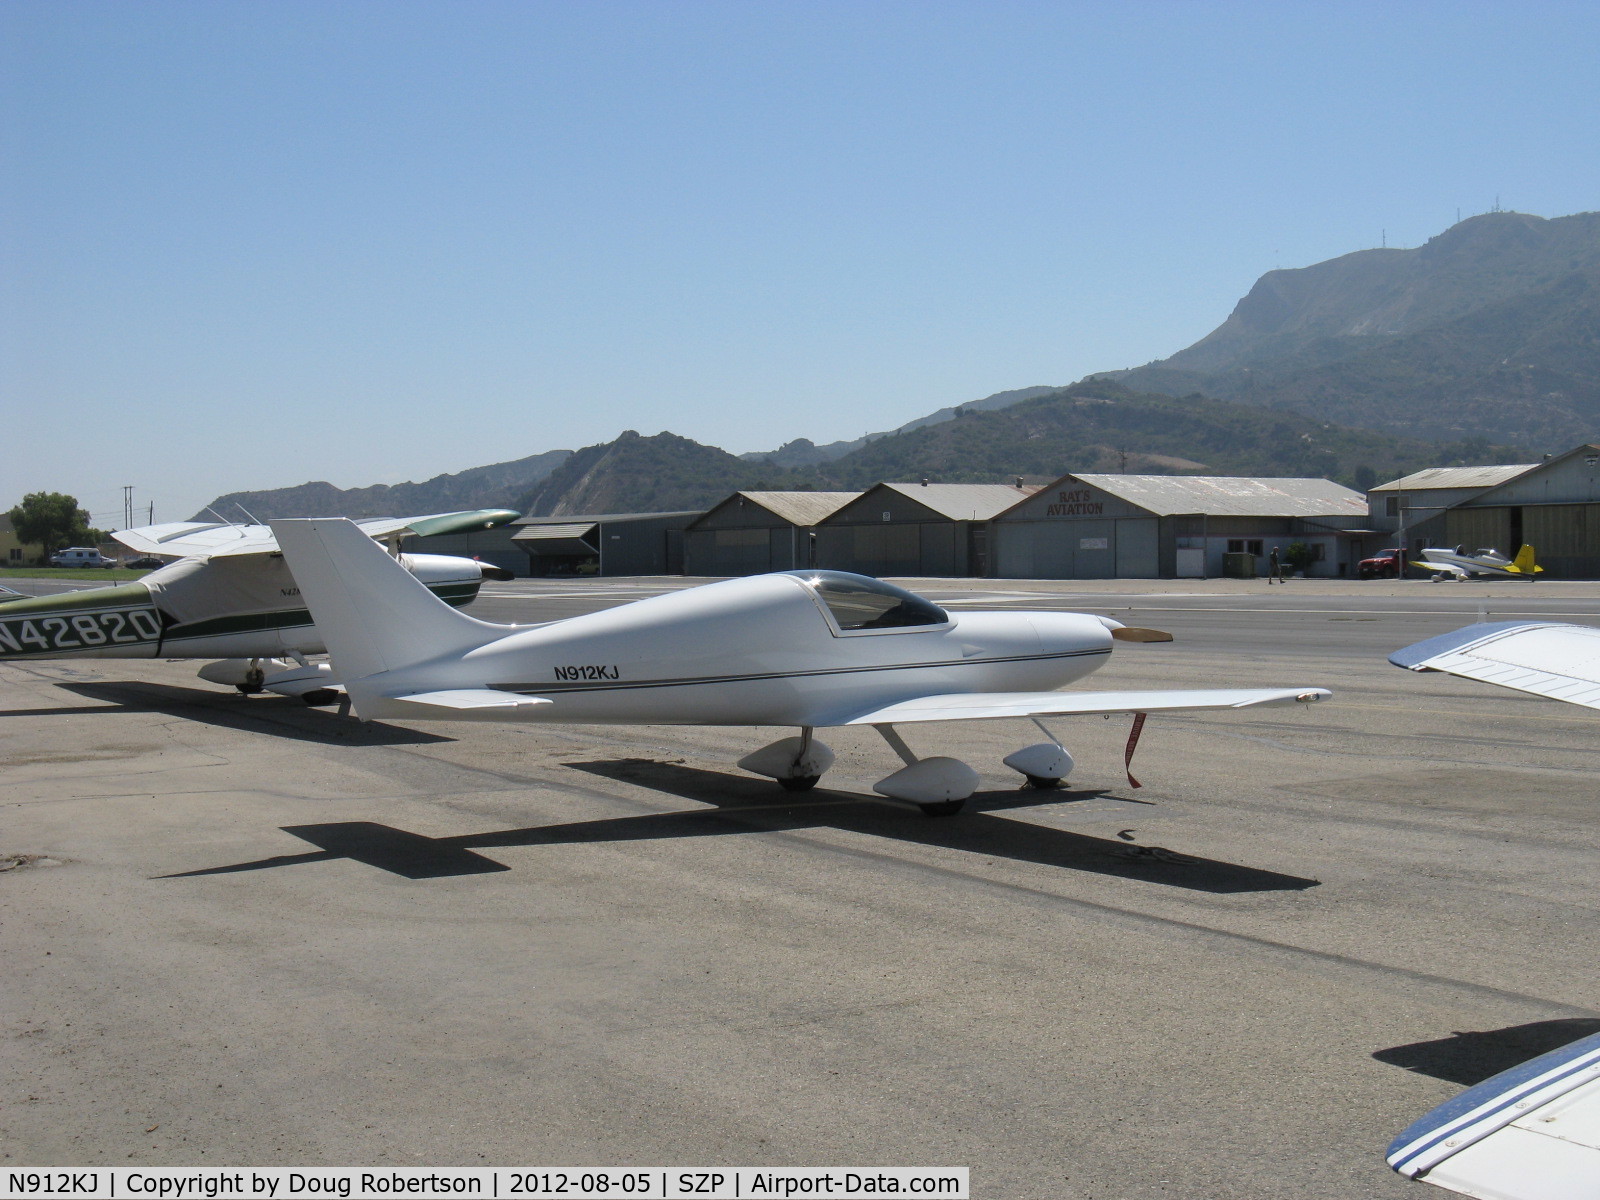 N912KJ, 2000 Aero Designs Pulsar XP912 C/N 349, 2000 Goodwin PULSAR 912XP, Rotax 912 100 Hp